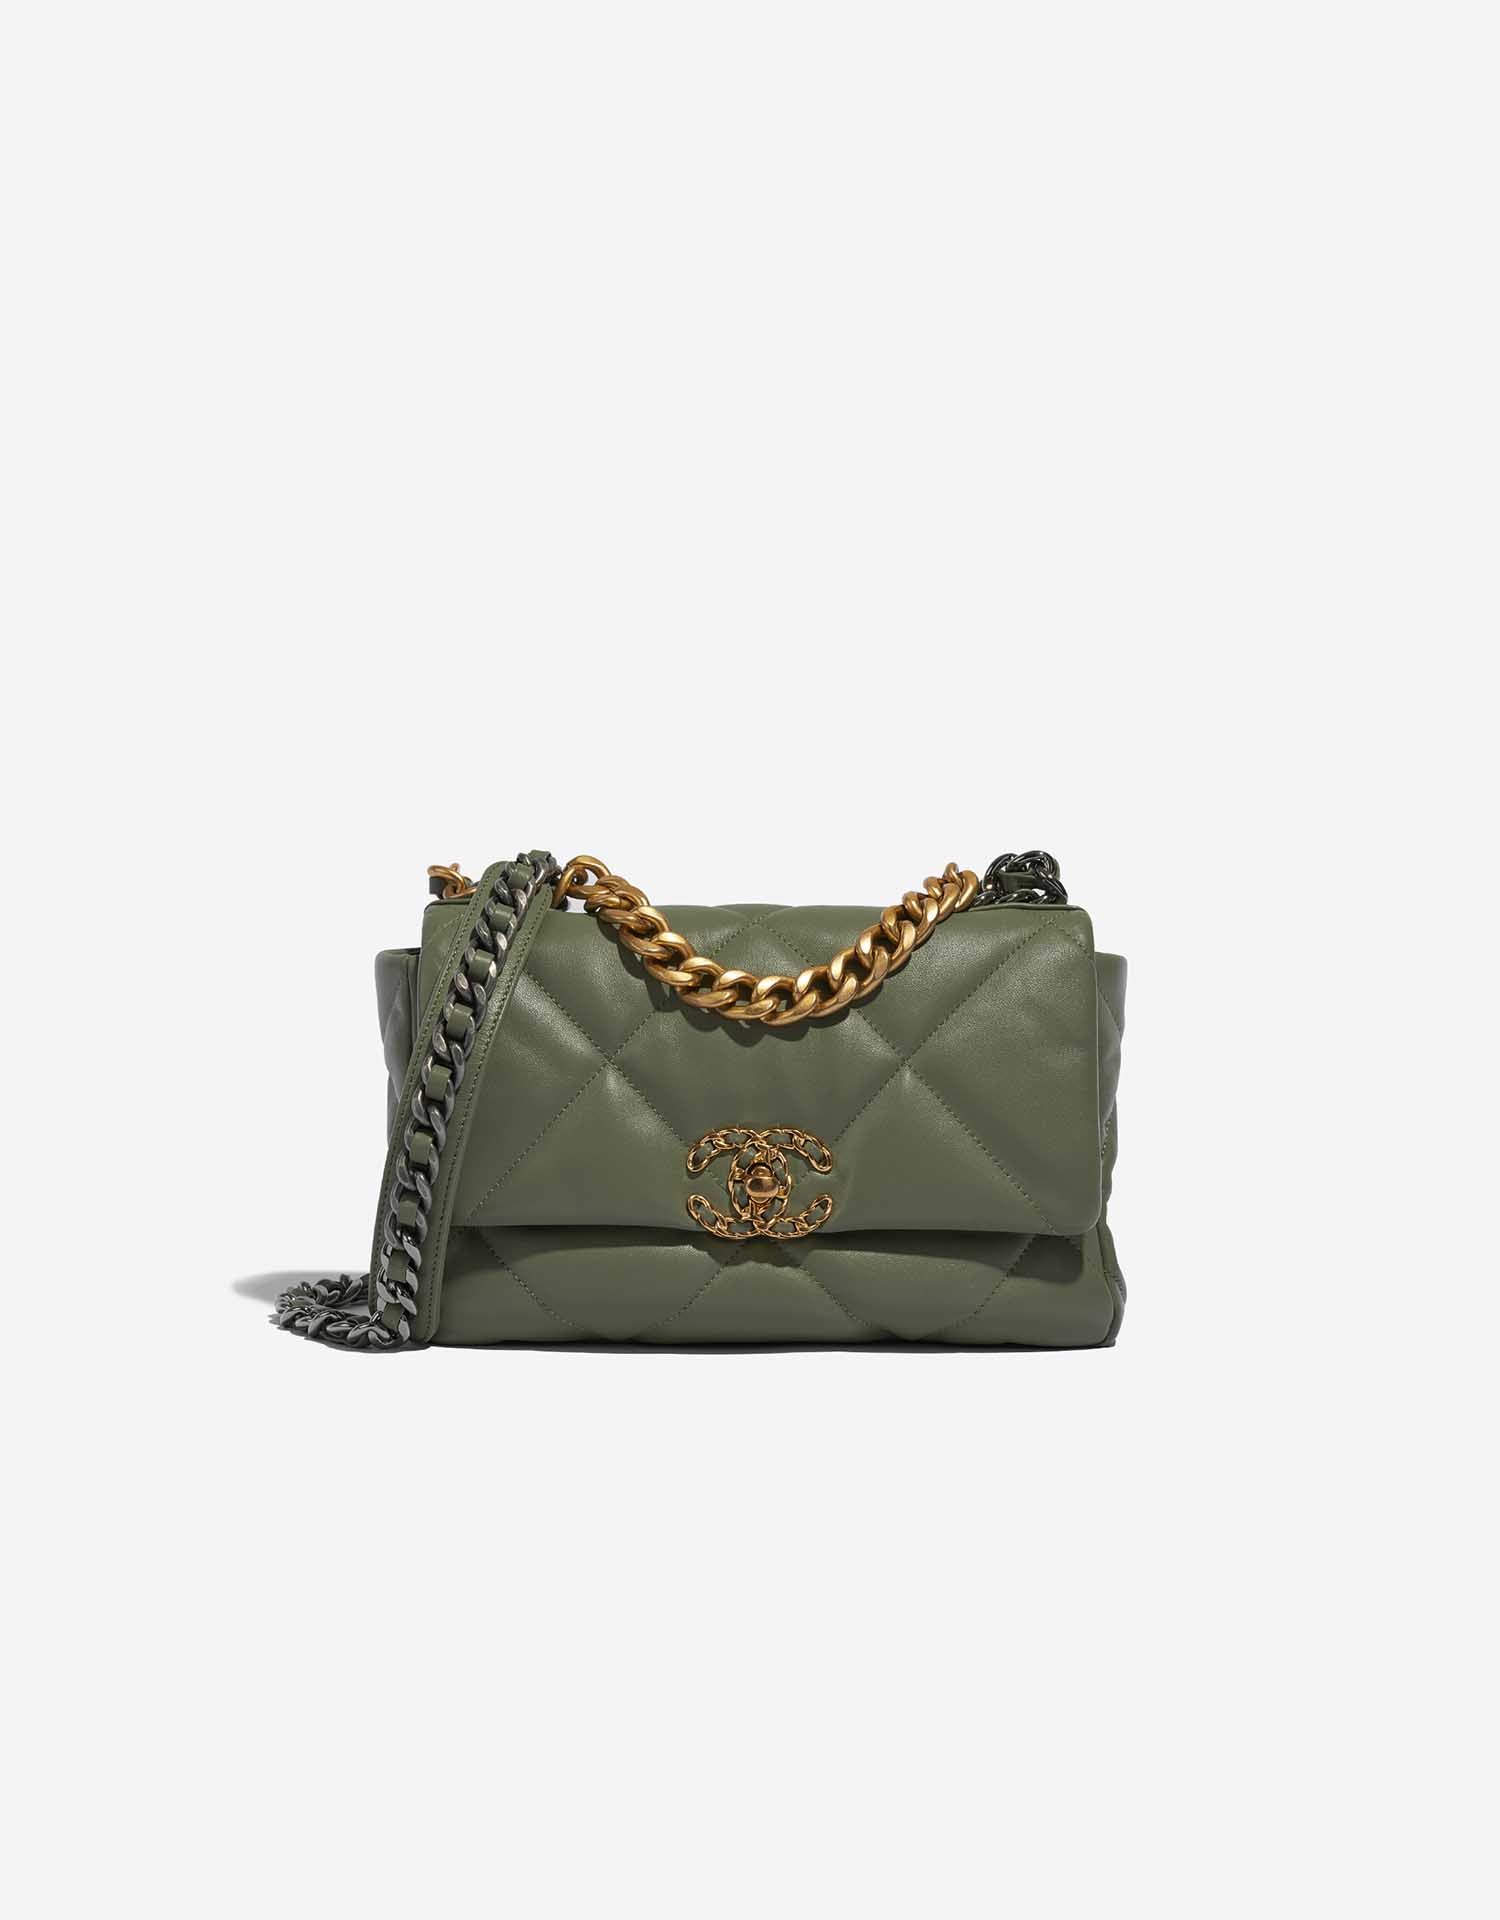 Chanel 19 Flap Bag Lamb Green